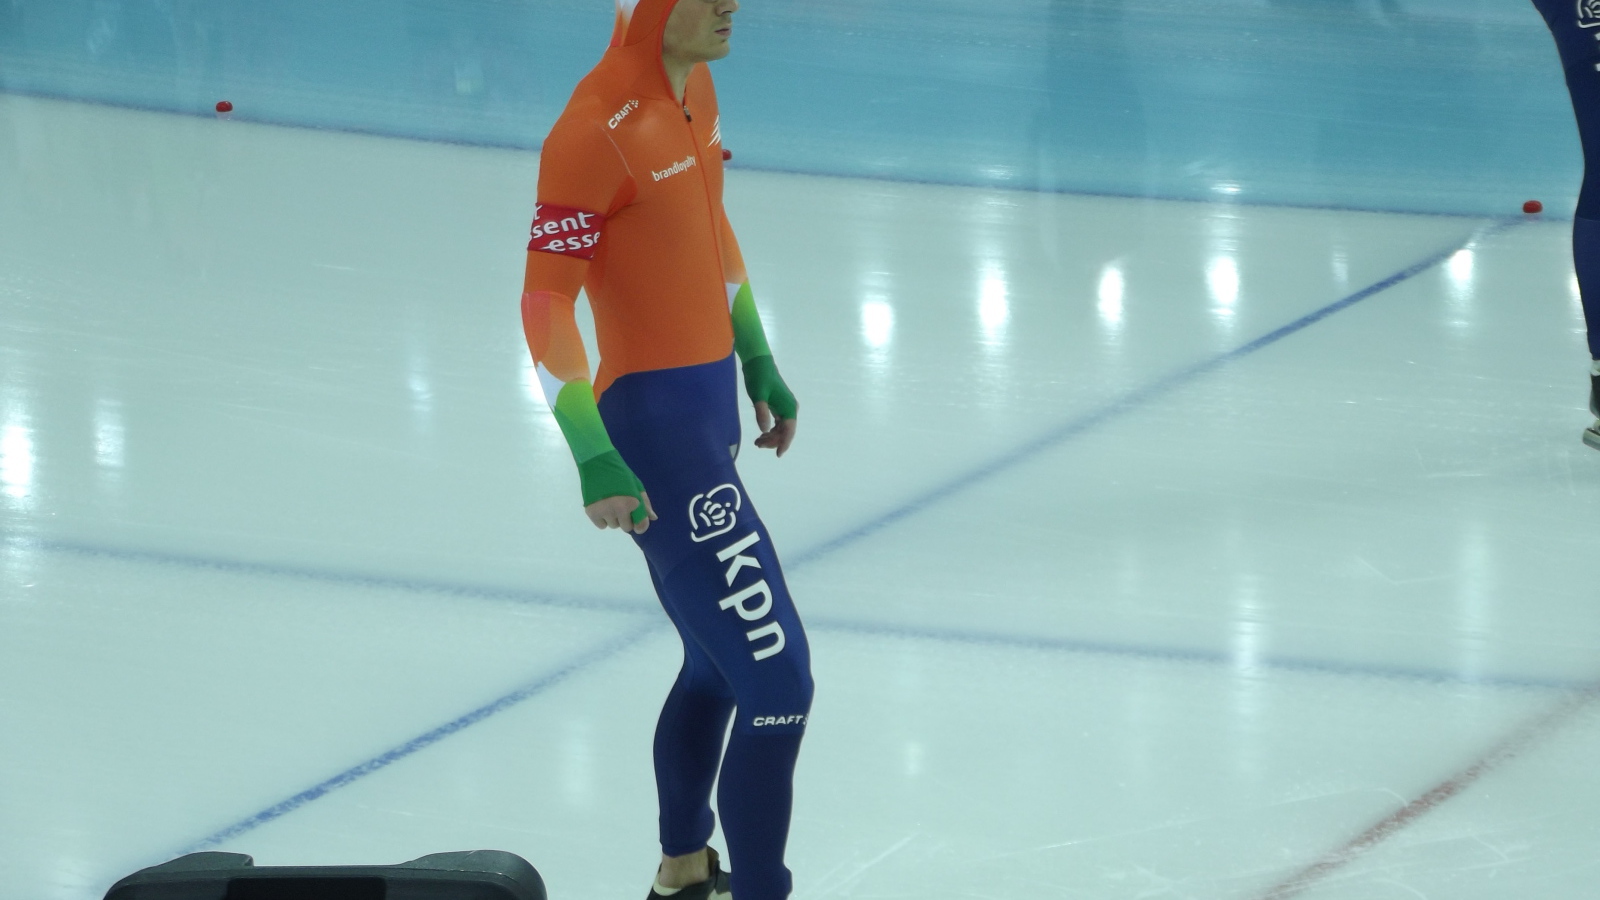 Jan Smeekens Dutch skater winner of the silver medal in Sochi